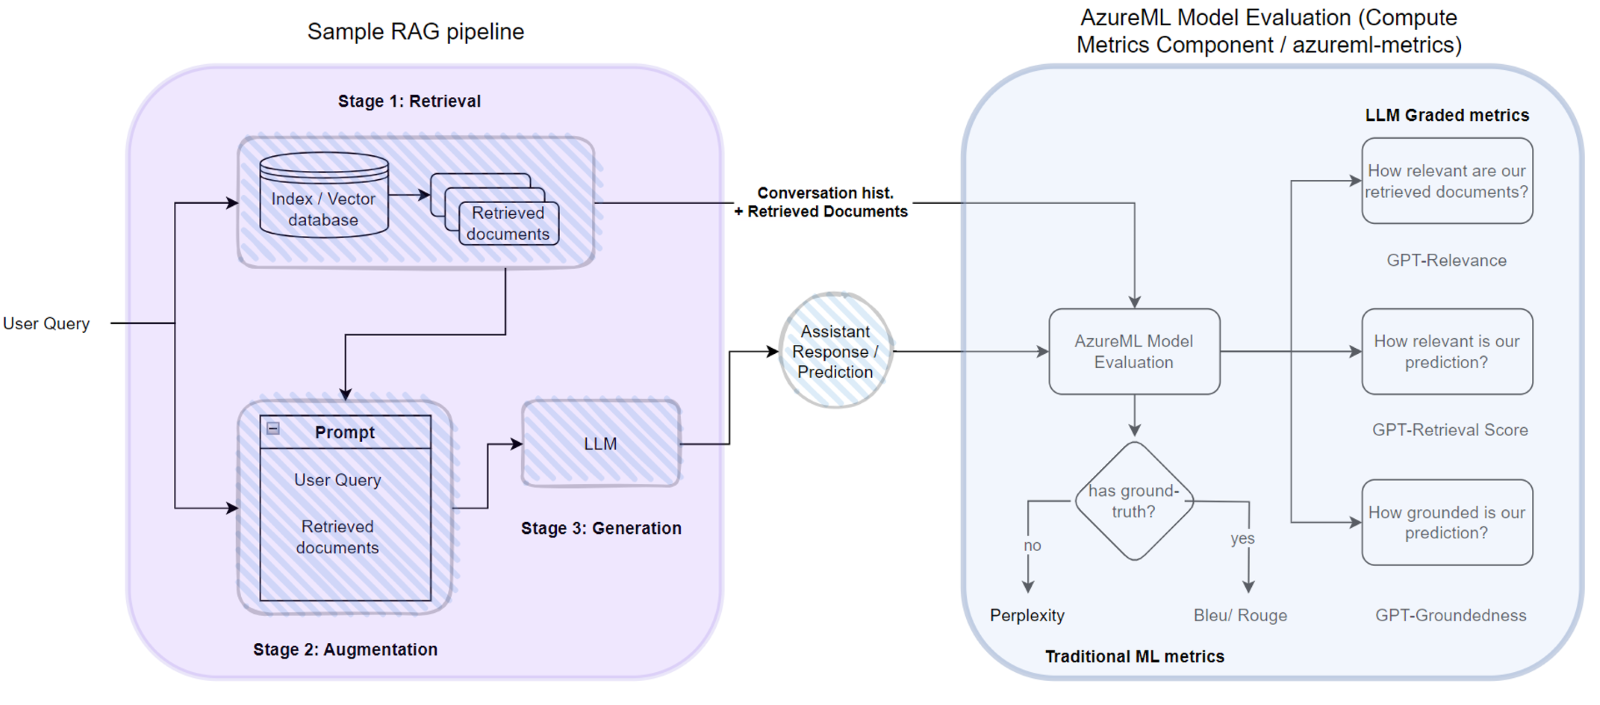 Evaluating RAG Applications with AzureML Model Evaluation